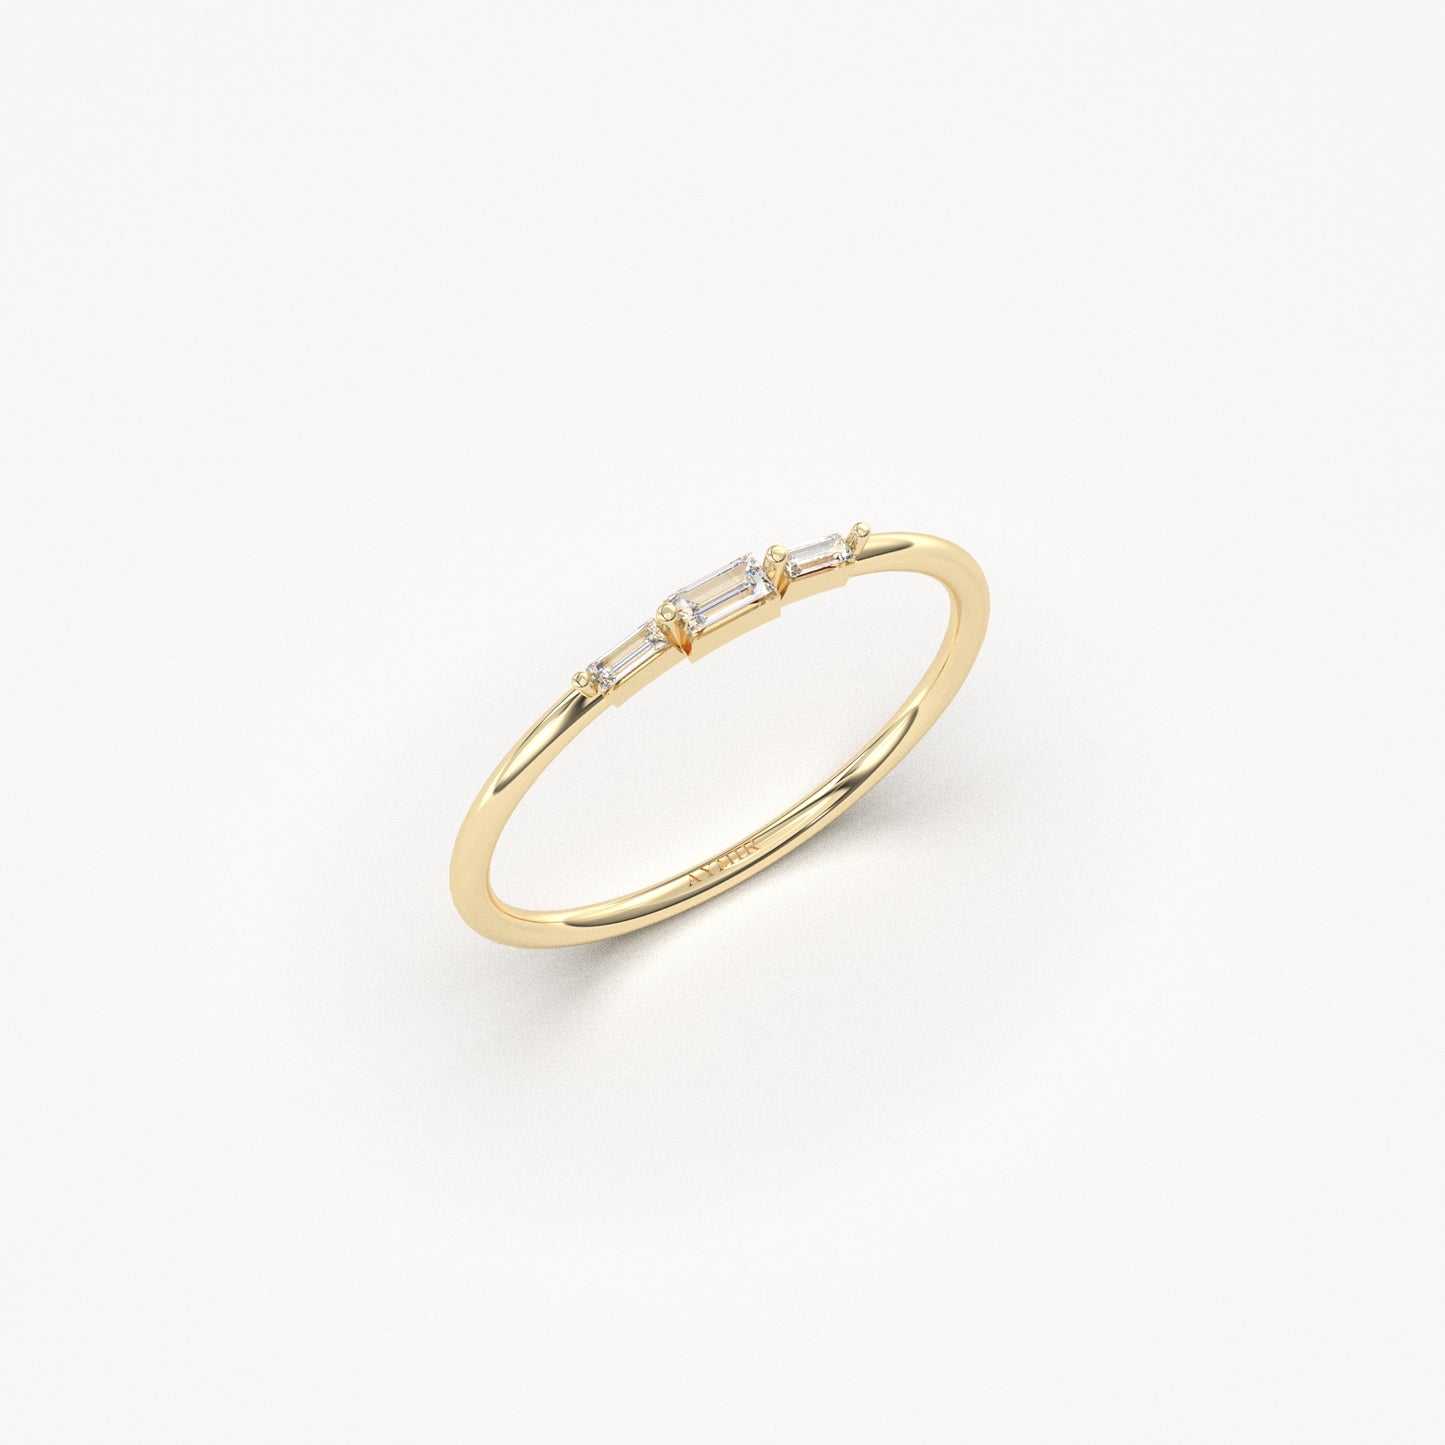 14K Gold Mini Baguette Diamond Ring - 2S159